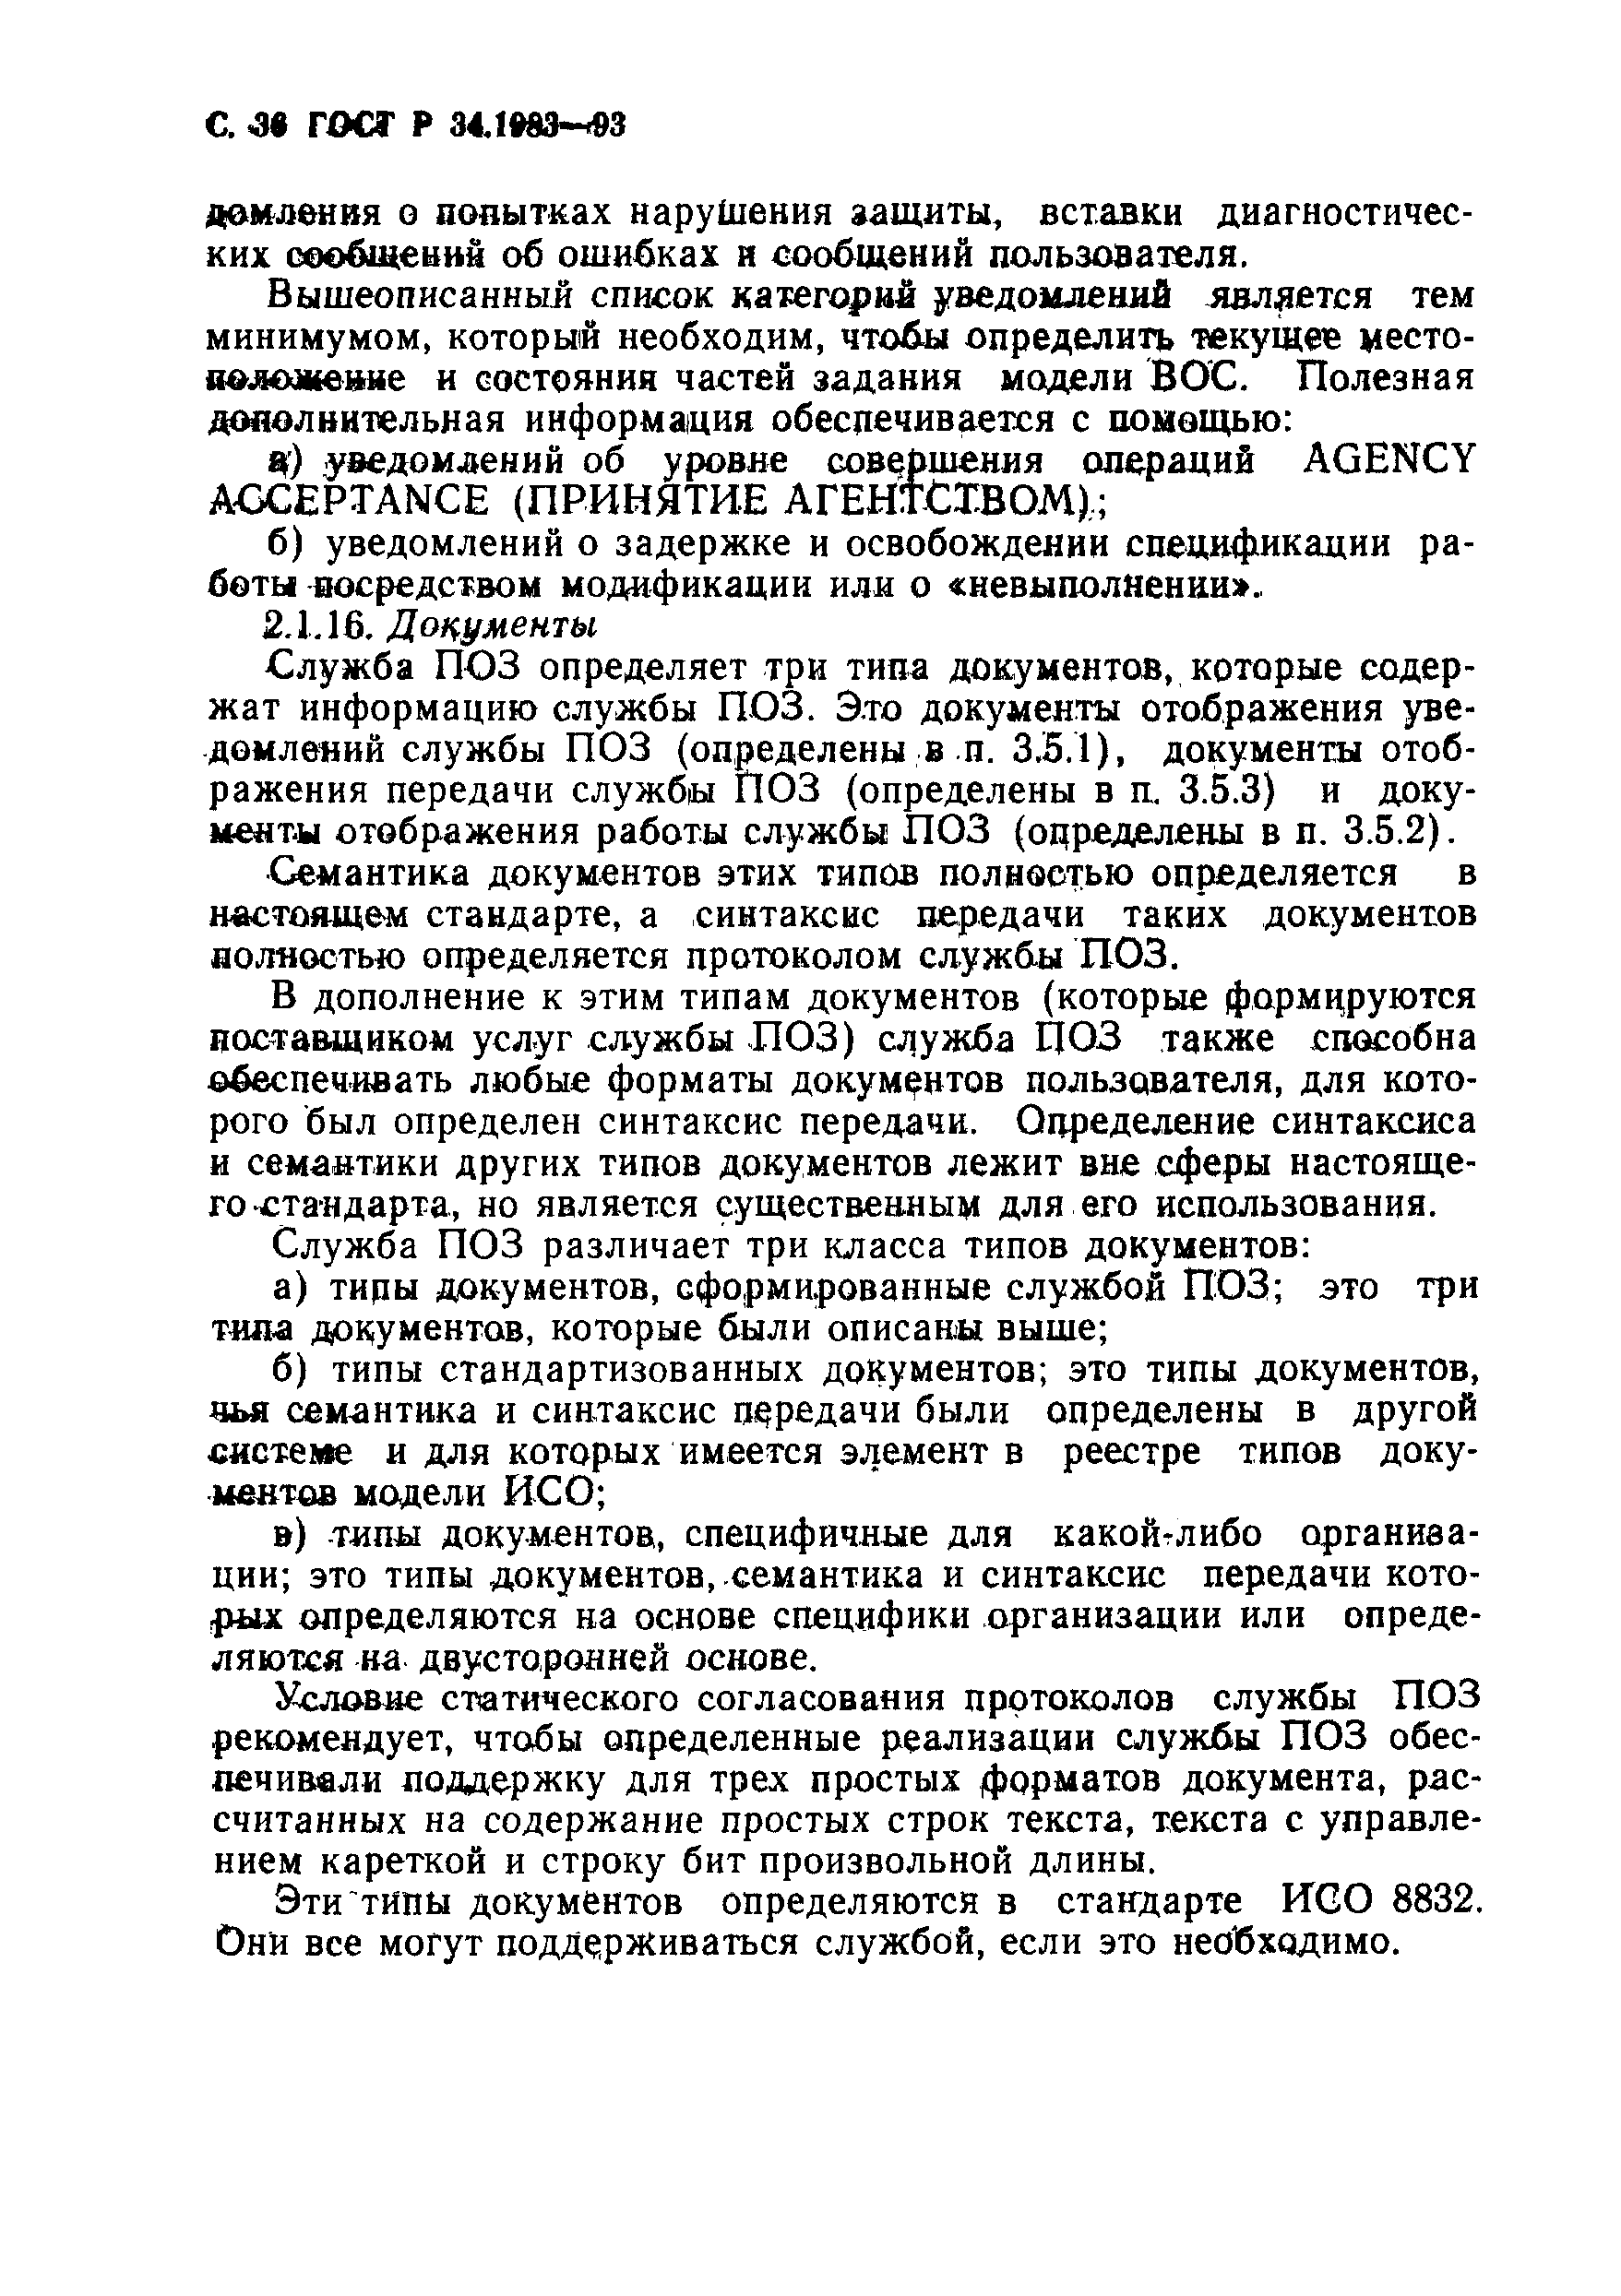 ГОСТ Р 34.1983-93. Страница 37